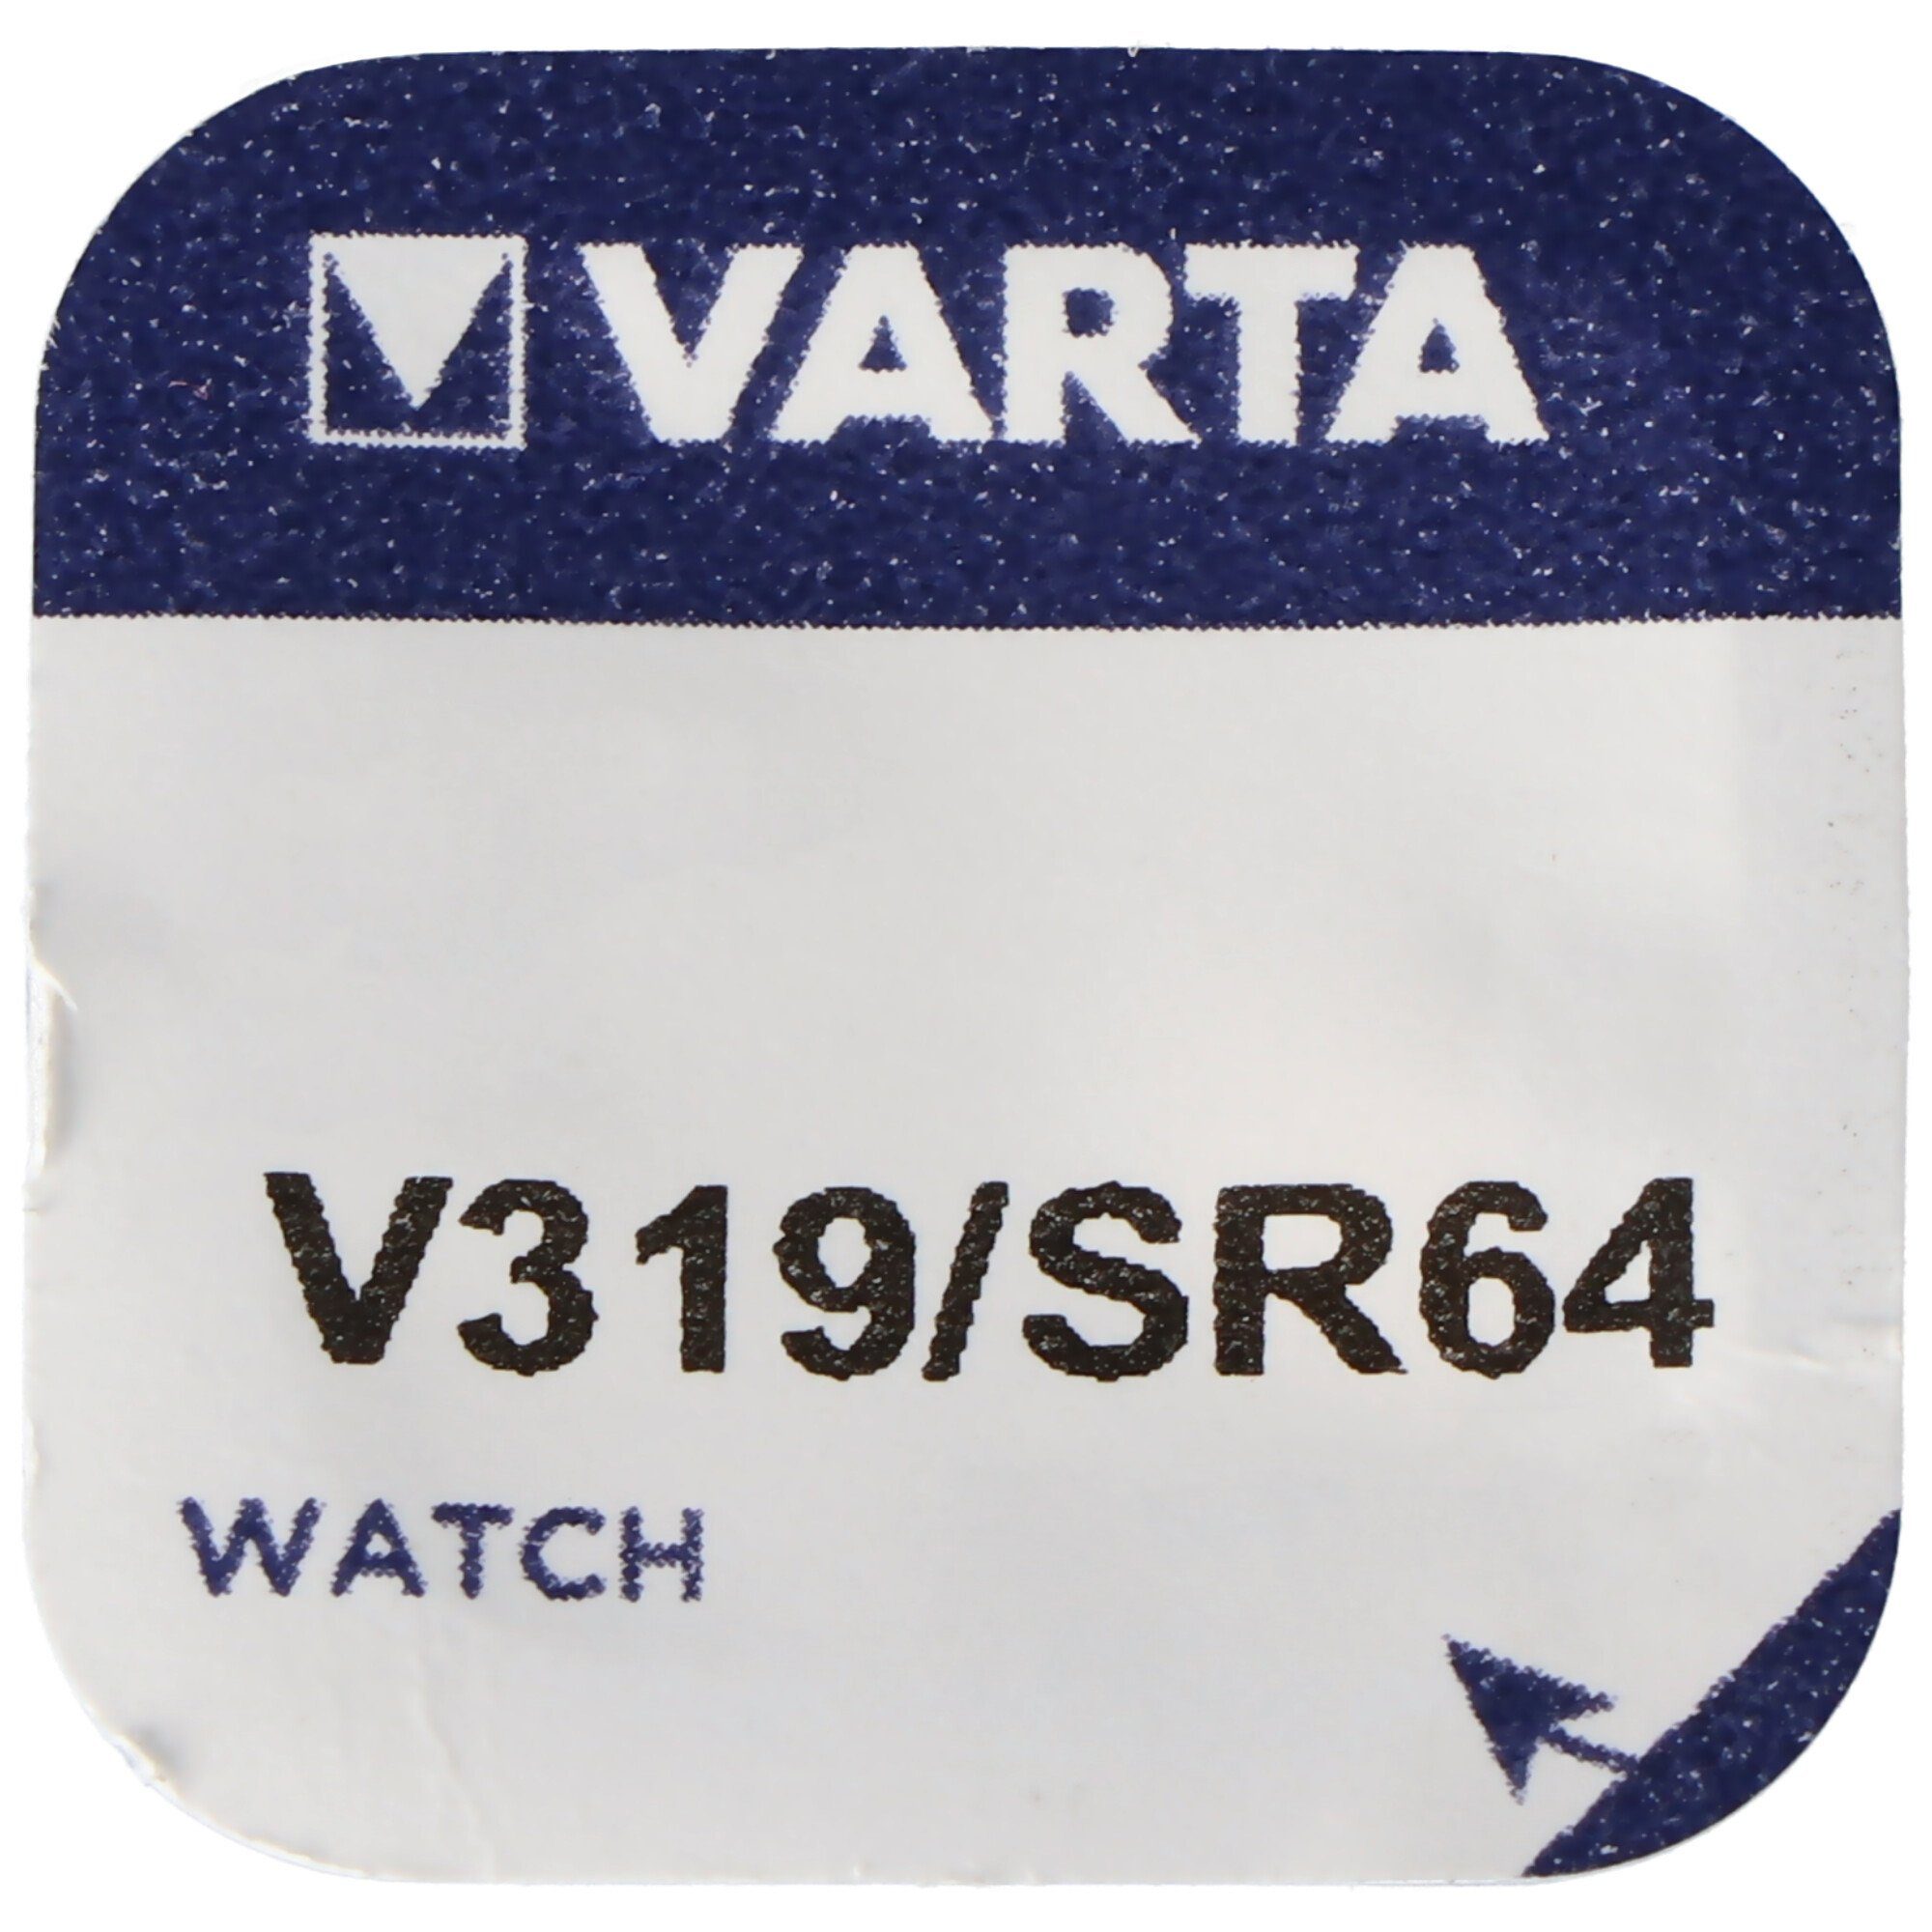 VARTA 319, Uhren für Knopfzelle etc. (1,6 Knopfzelle, V319, V) SR64, SR527SW Varta